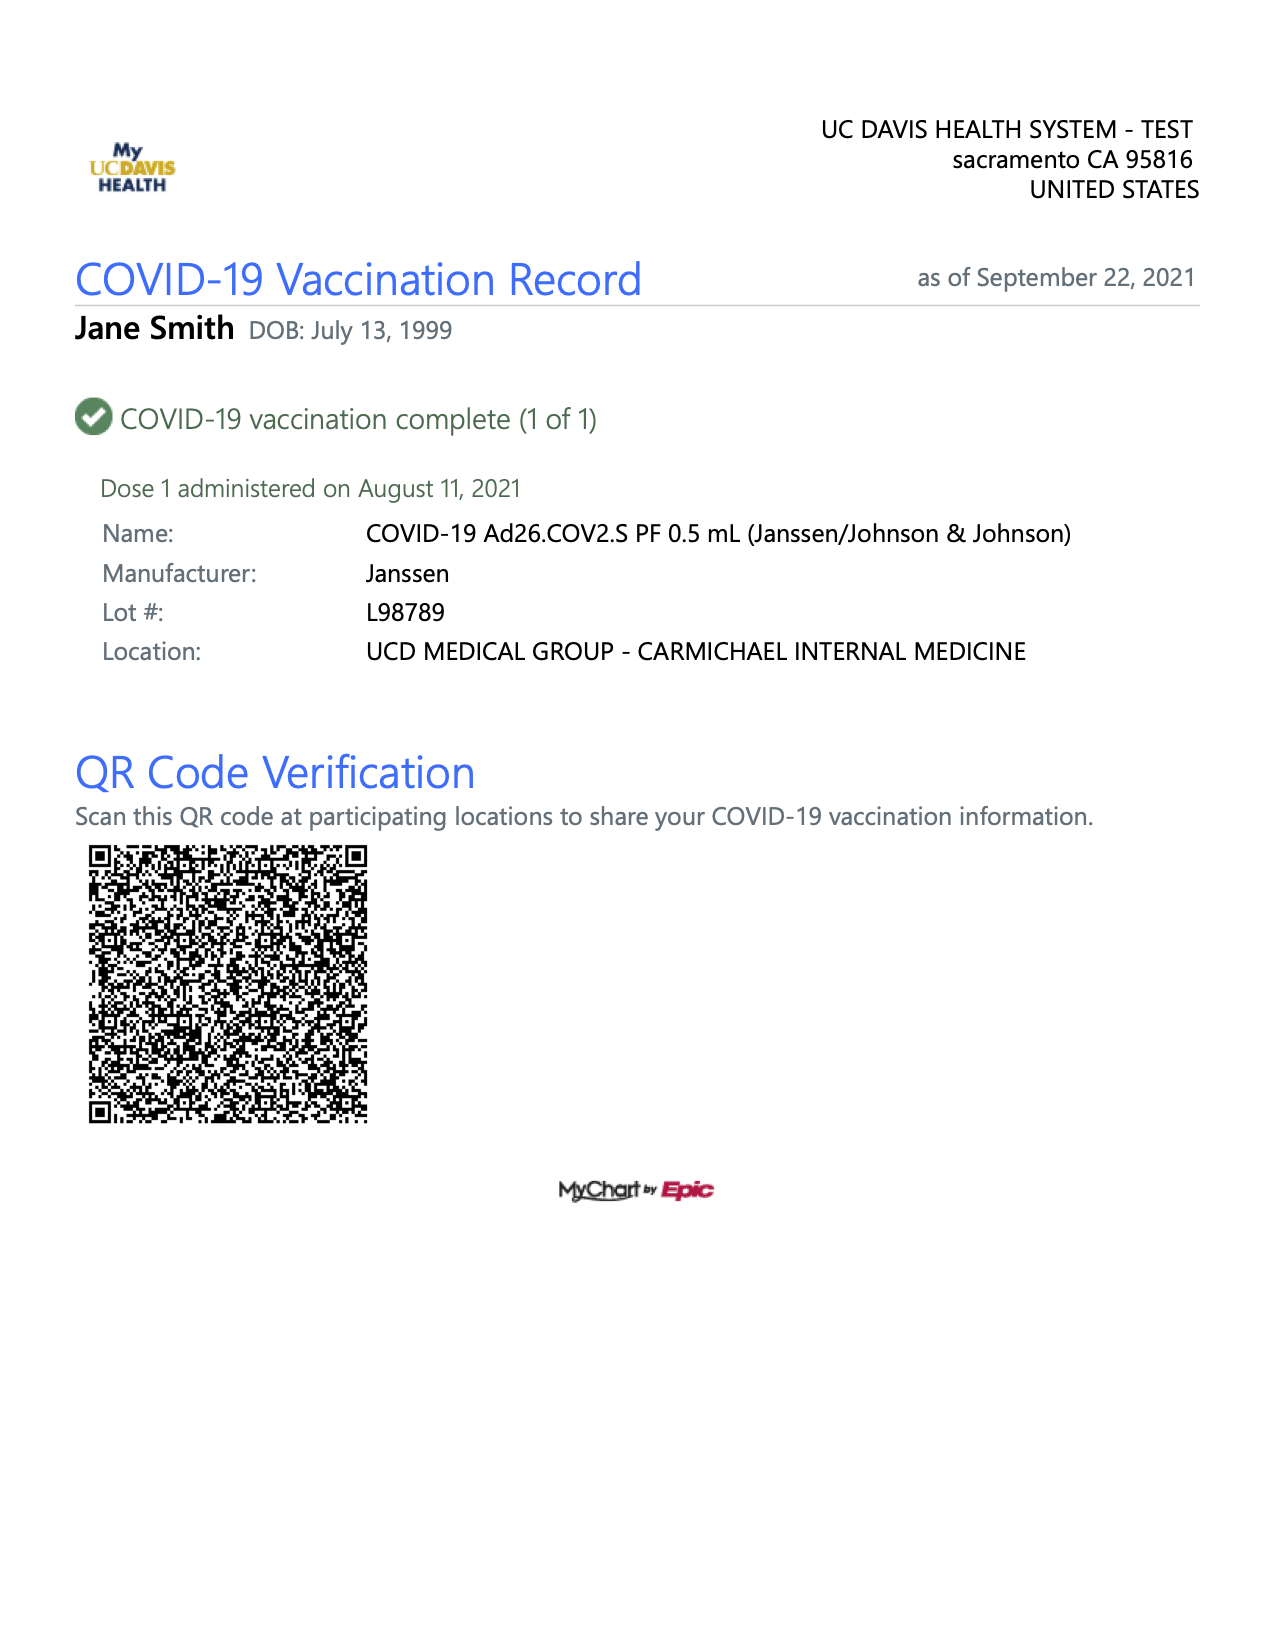 example printed vaccine QR code